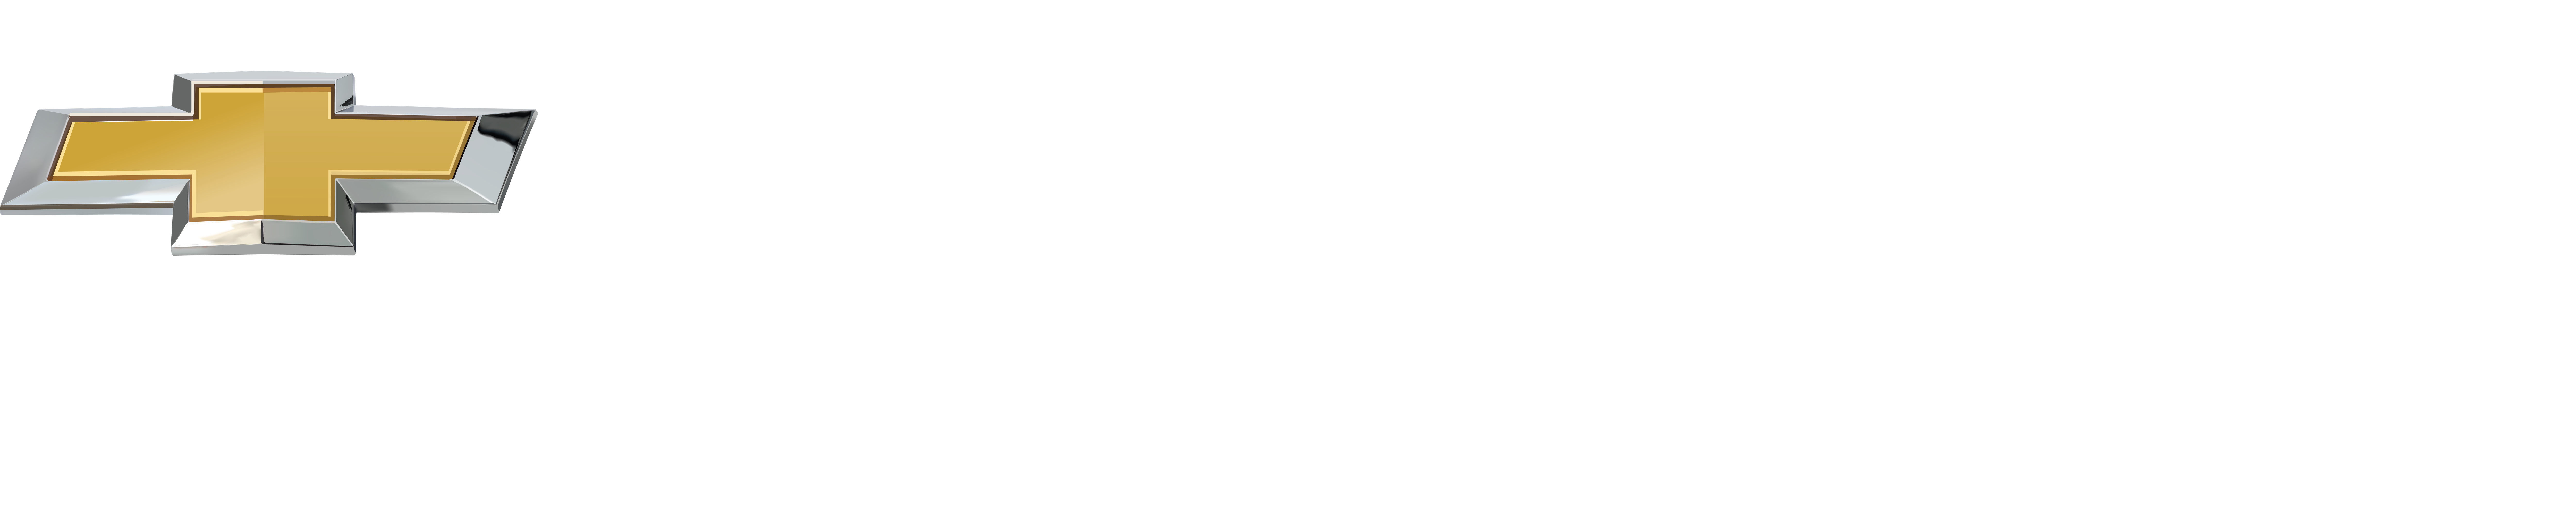 Logotipo de Phillips Chevrolet